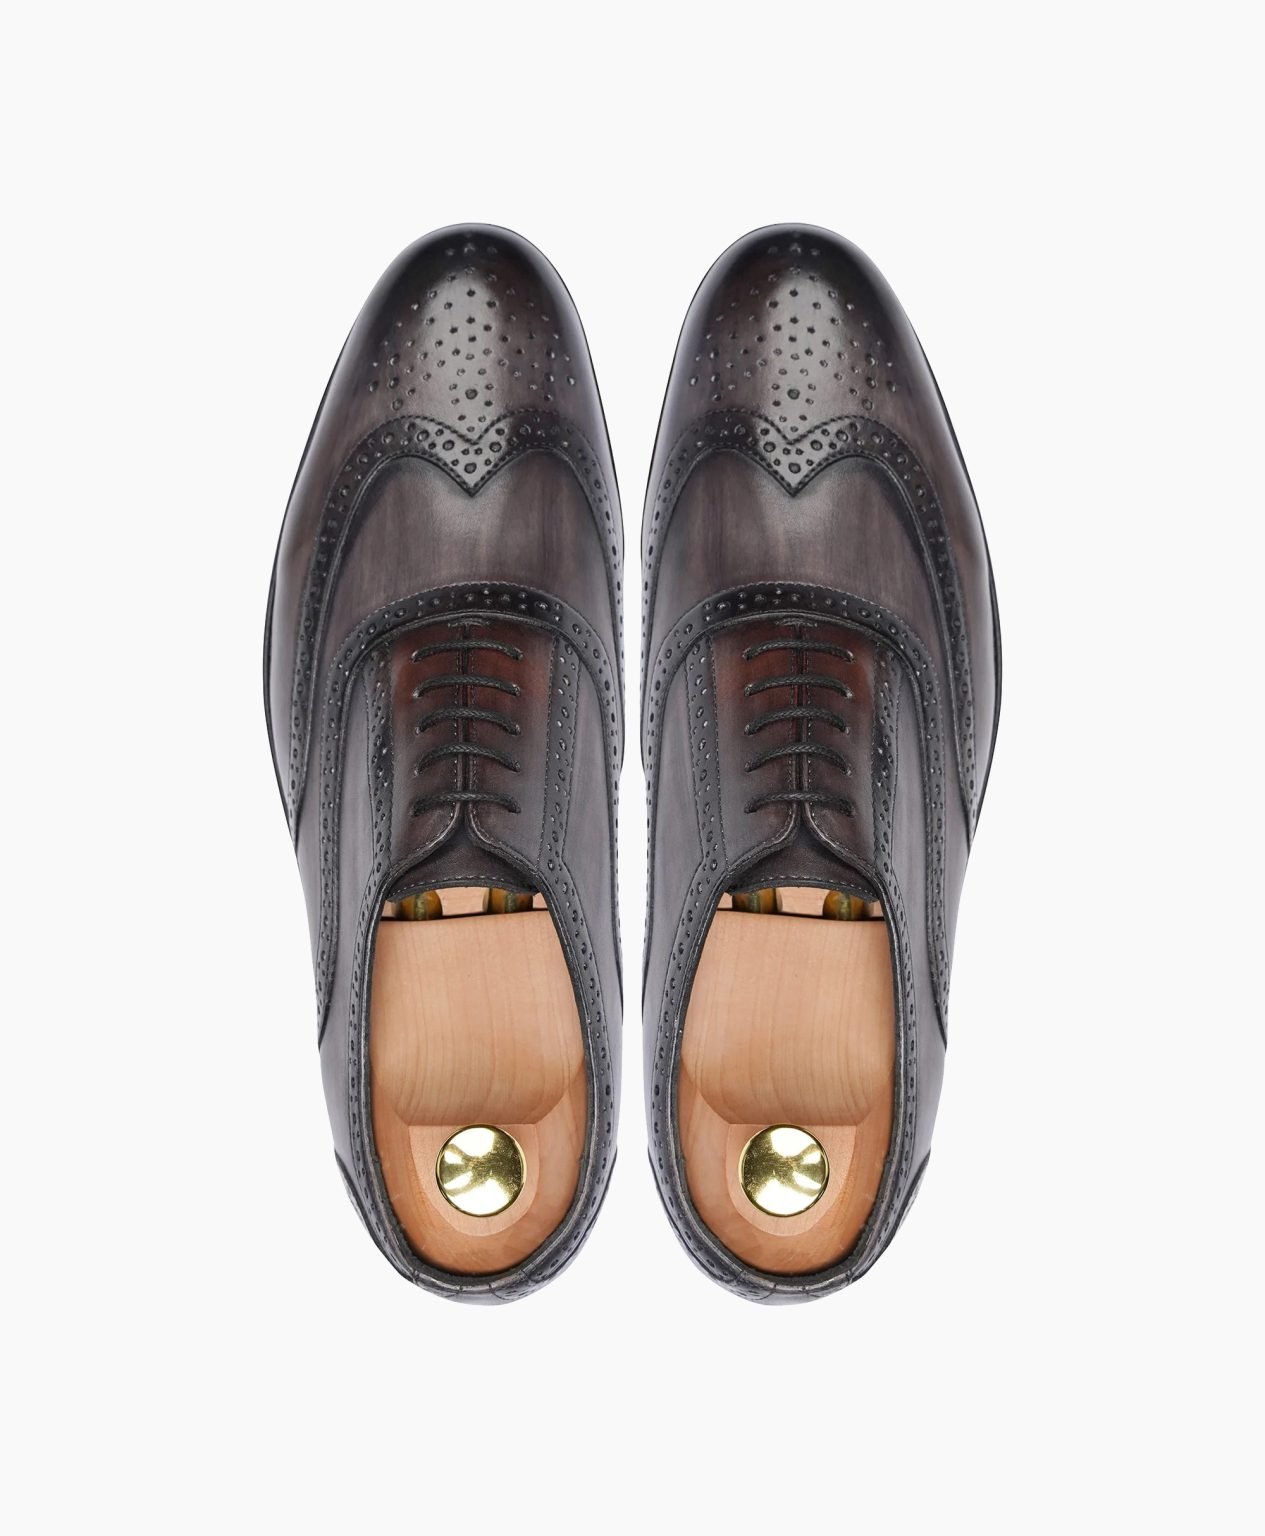 aylesbury-oxford-burnish-gray-leather-shoes-image202